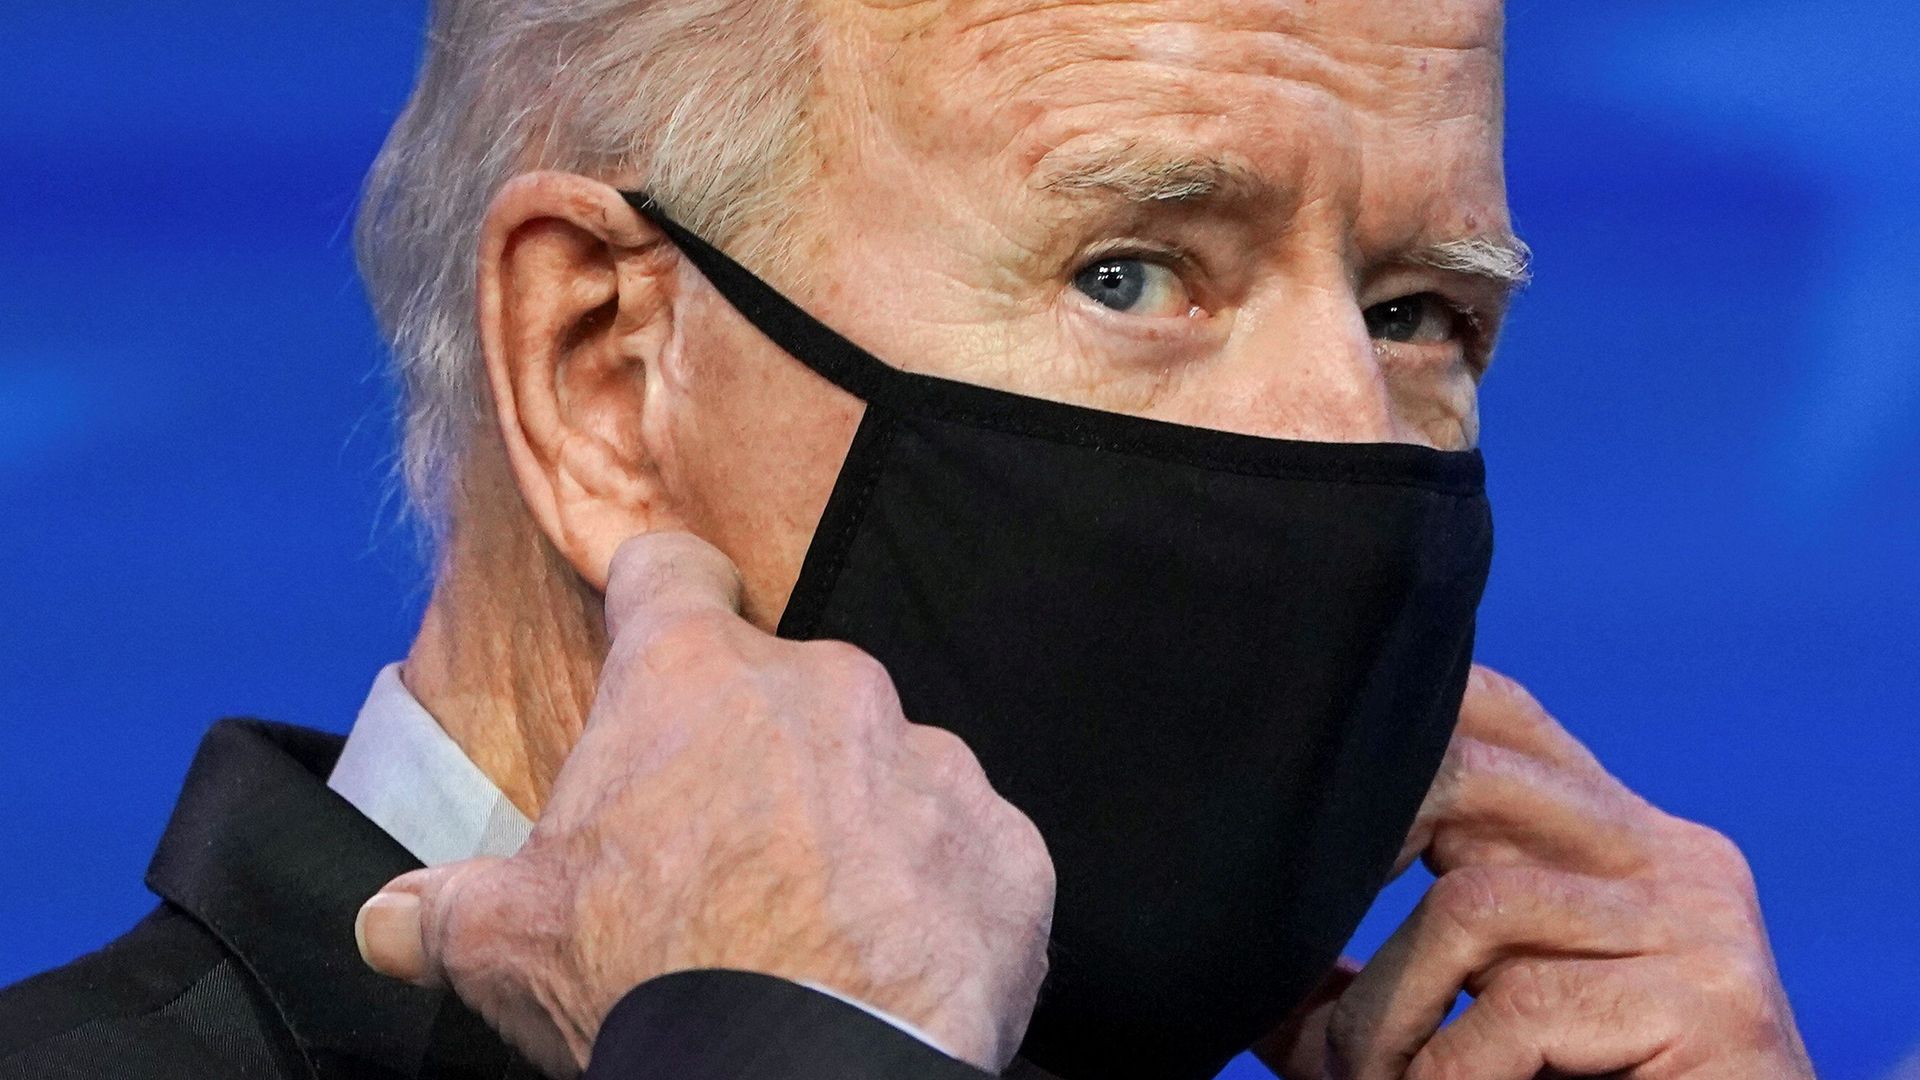 Biden puts on a face mask